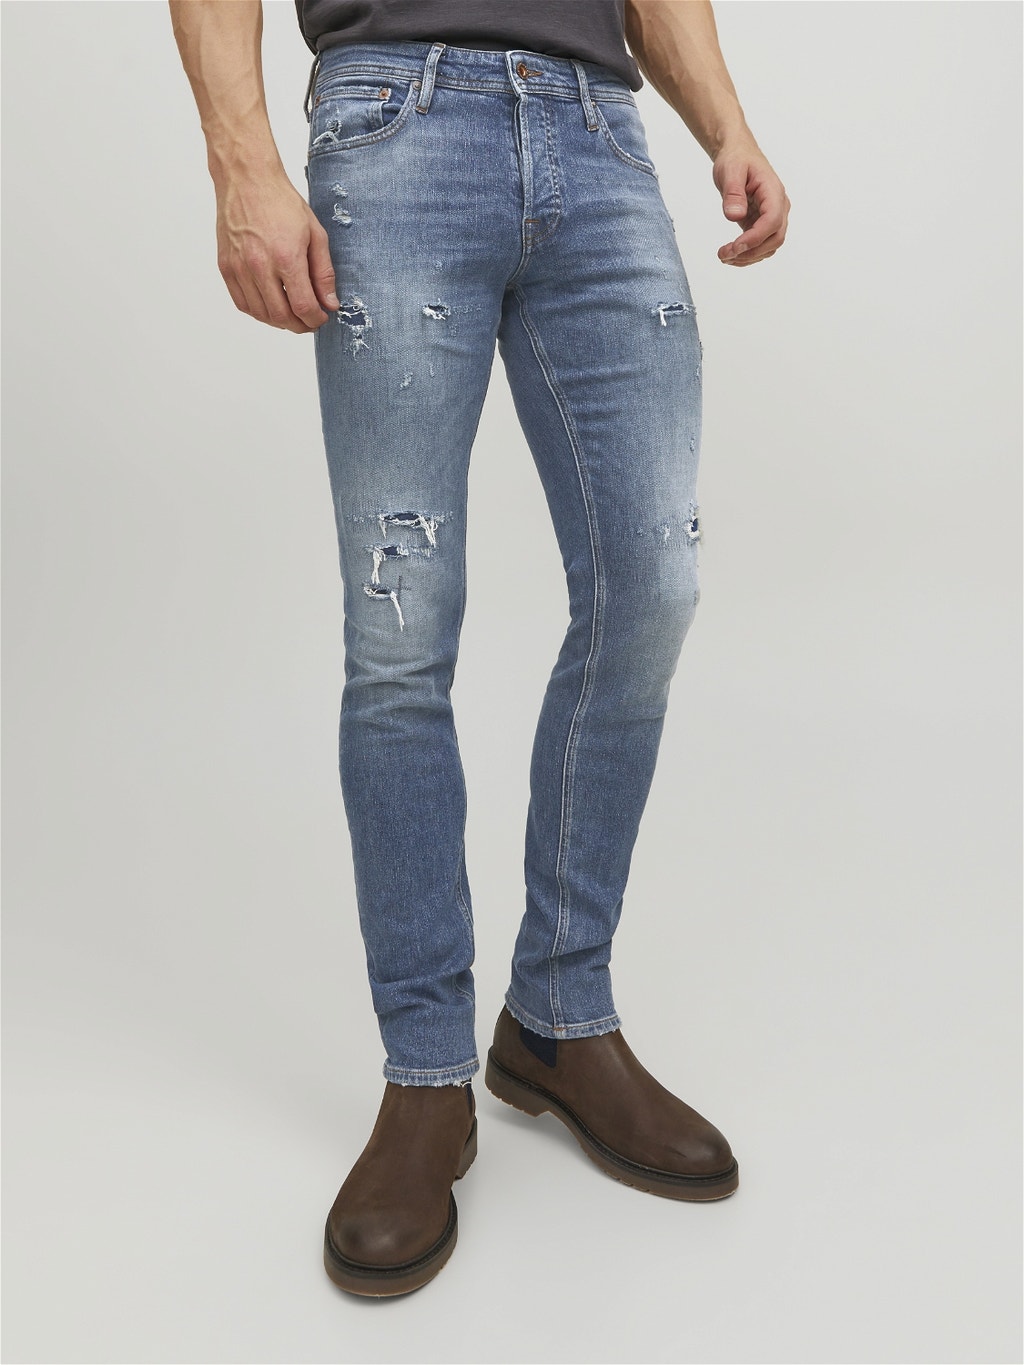 Tim Original JJ 273 LID Slim/straight jeans with 30% discount! Jack & Jones®